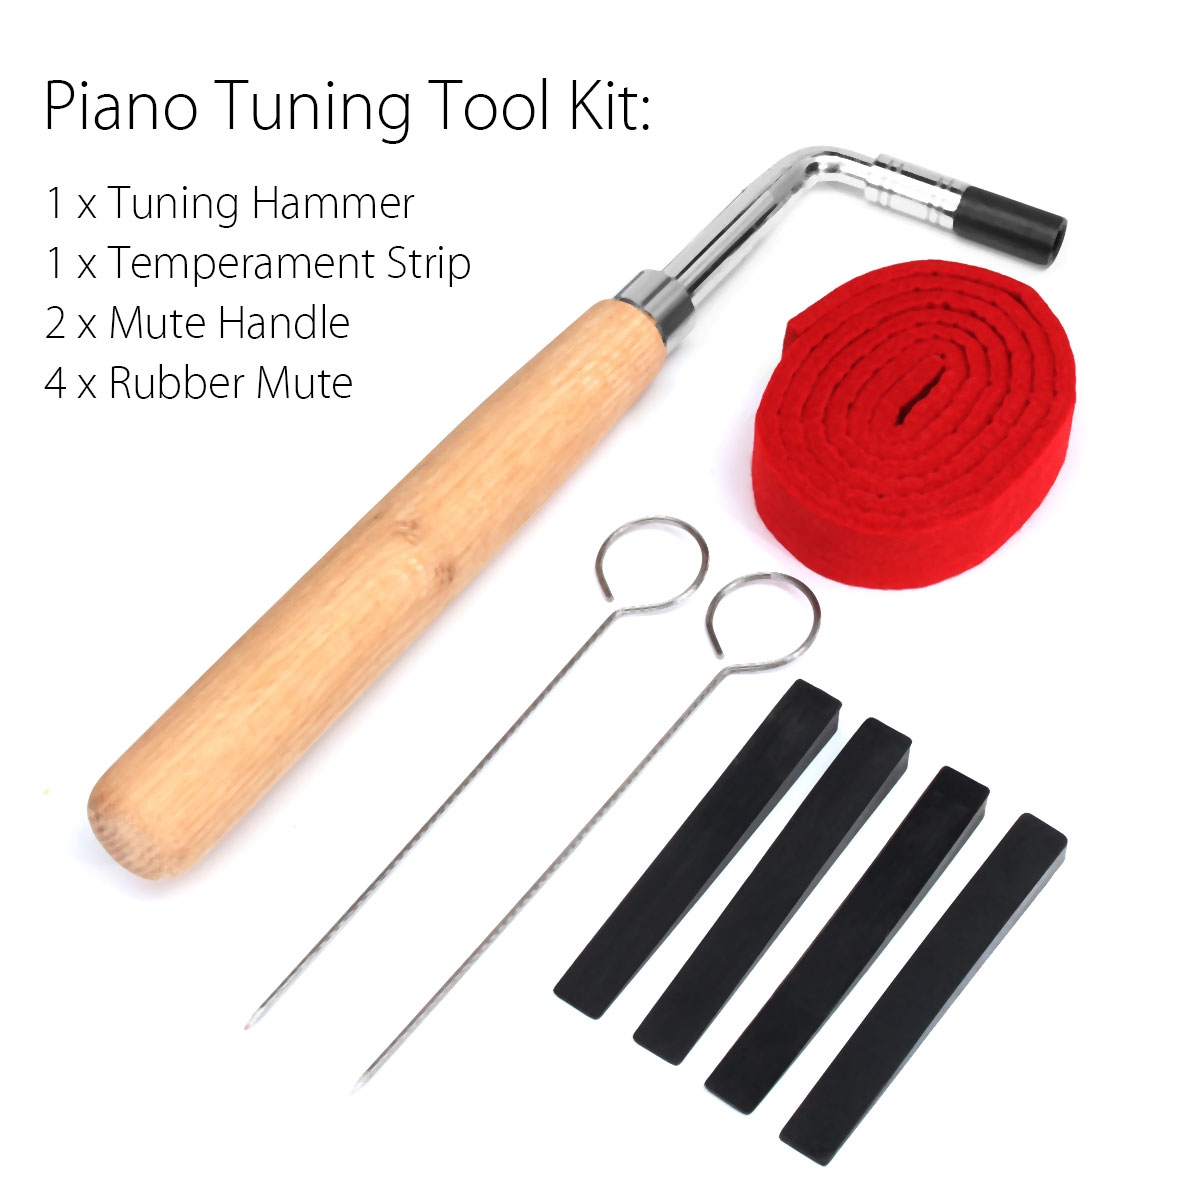 8PCS Piano Tuning Tools Tuning Hammer Temperament Strip Handles Long Rubber Mute